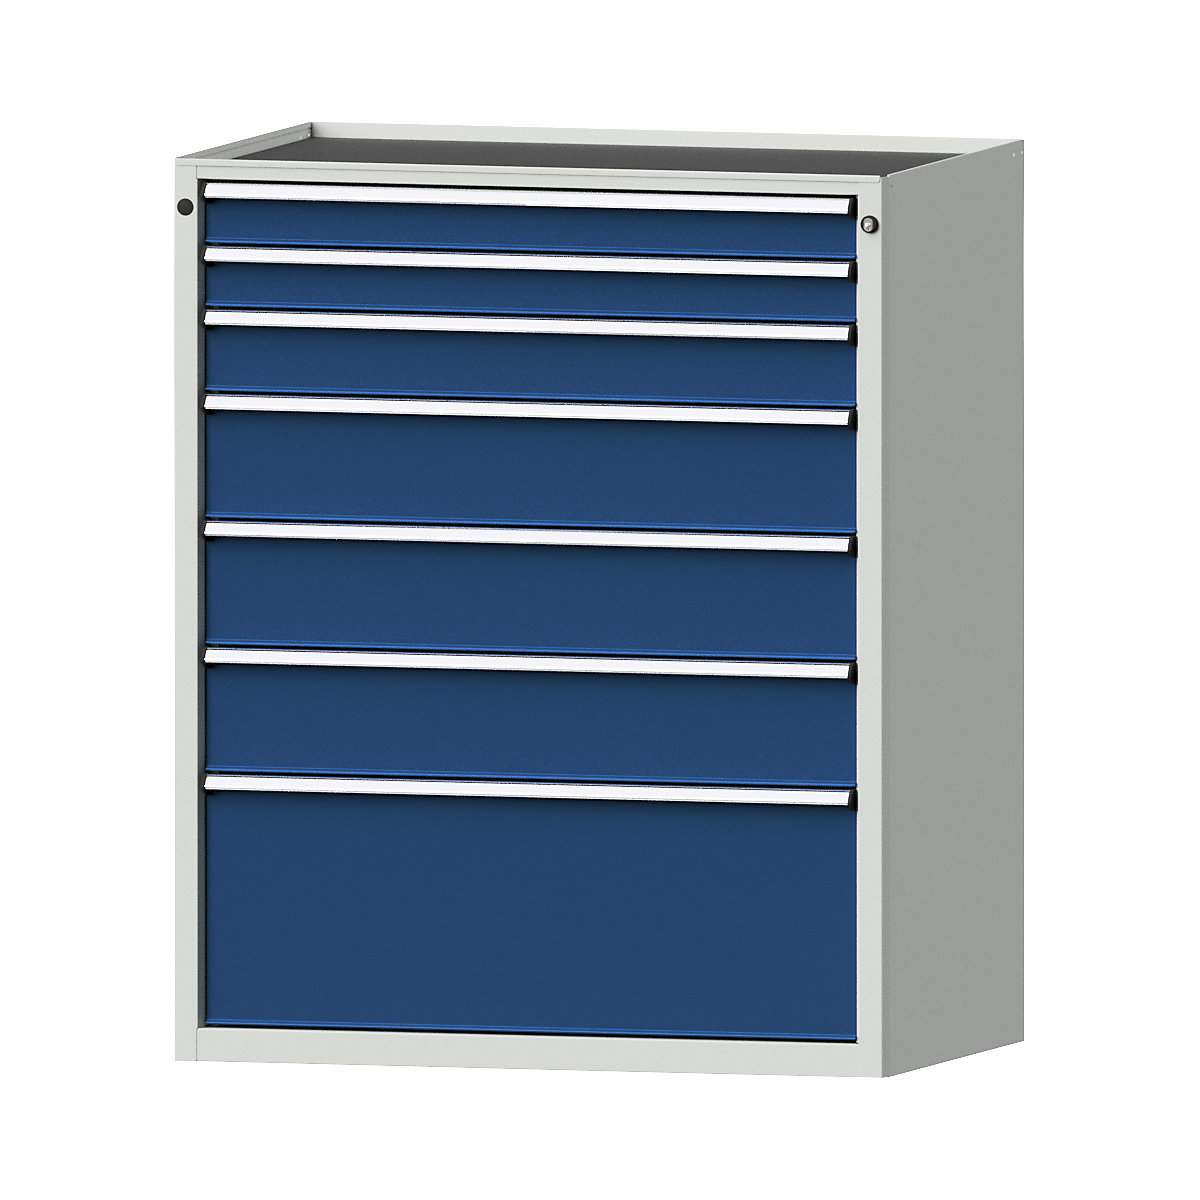 Armoire à tiroirs – ANKE, l x p 1060 x 675 mm, 7 tiroirs, hauteur 1280 mm, façade bleu gentiane-18